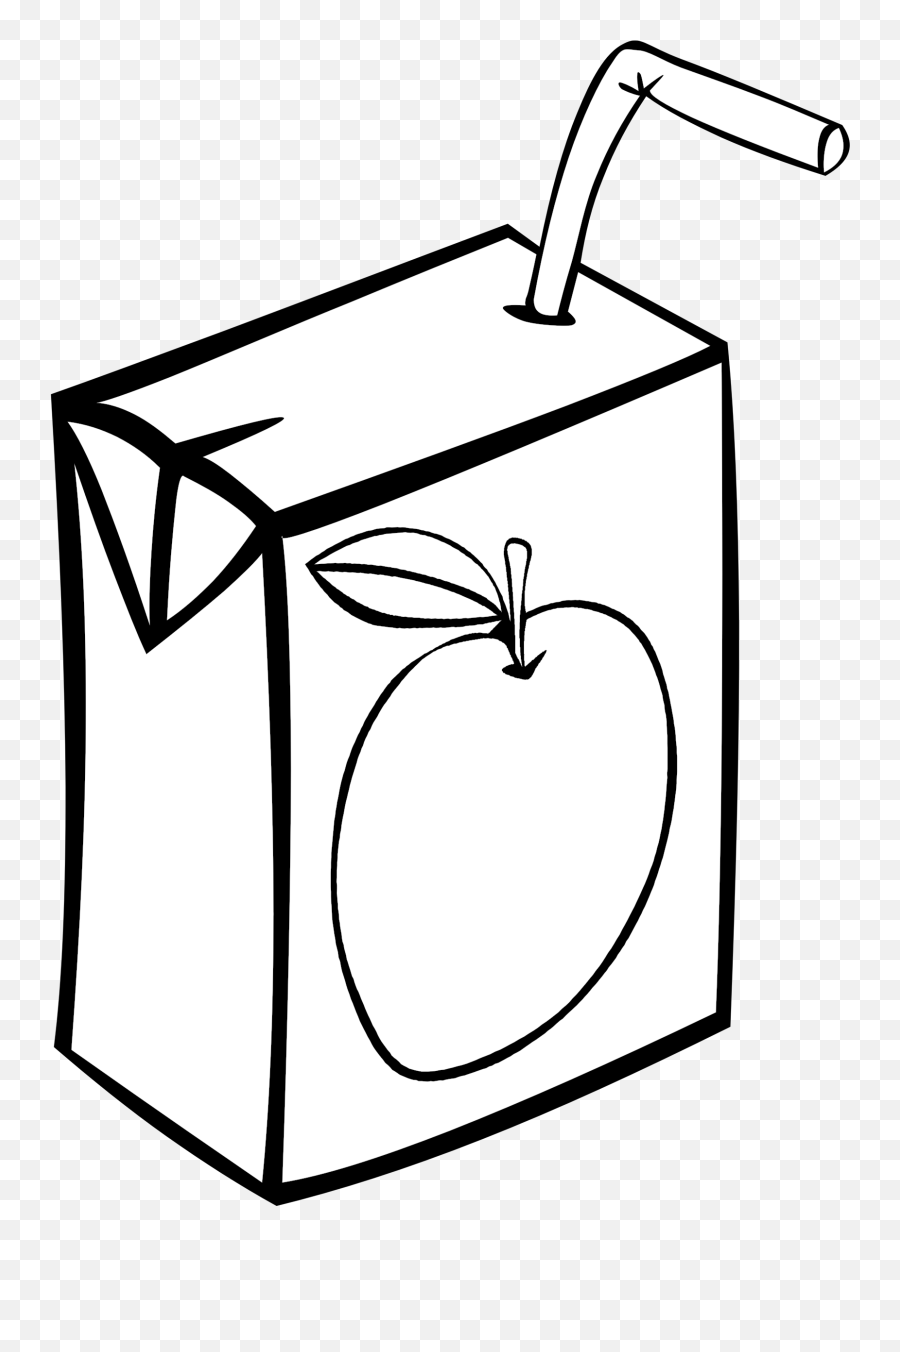 Juice Clipart Apple Juice Juice Apple - Apple Juice Clipart Black And White Emoji,Apple Drink Emoji